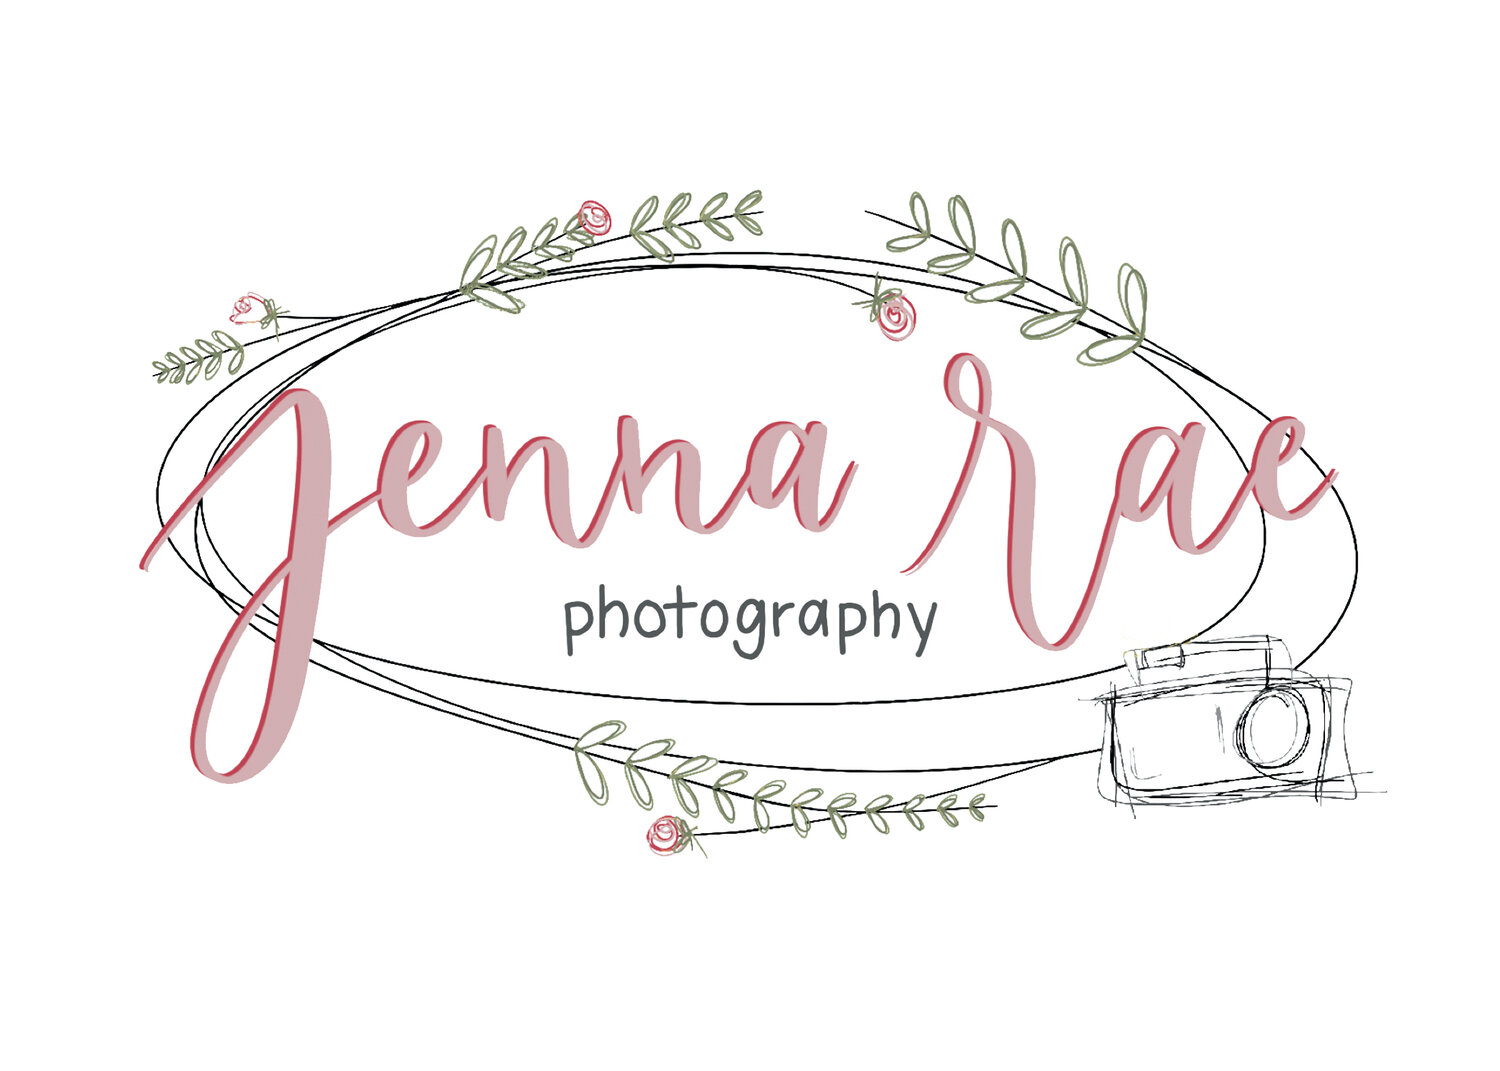 Jenna Rae Photography